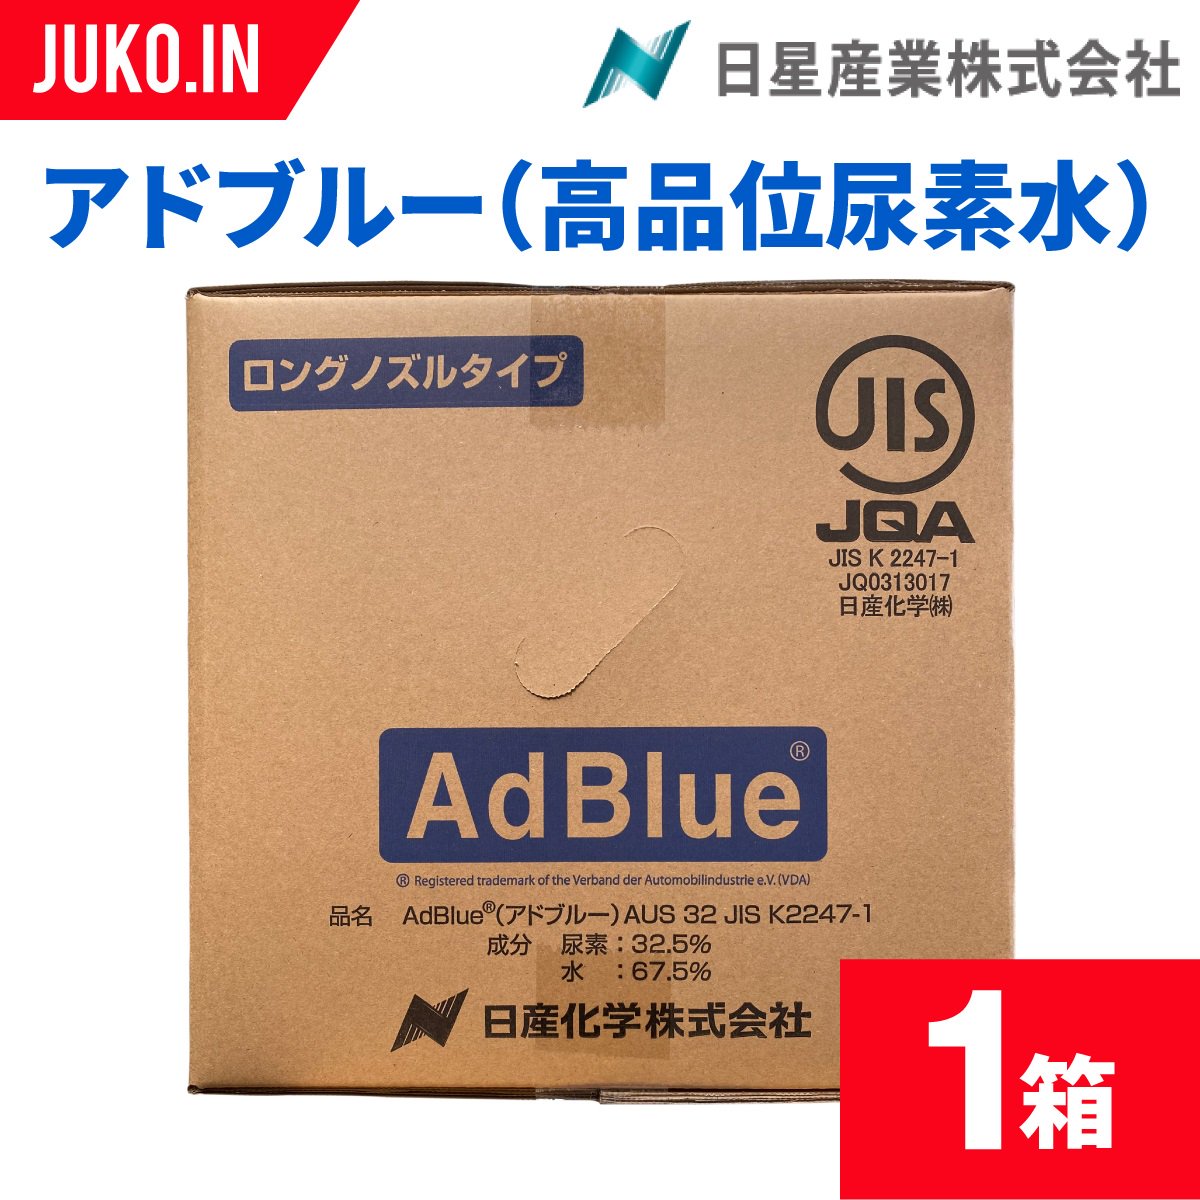 AdBlue|国産アドブルー|20L 1箱|高品位尿素水|バッグインボックス|日星産業